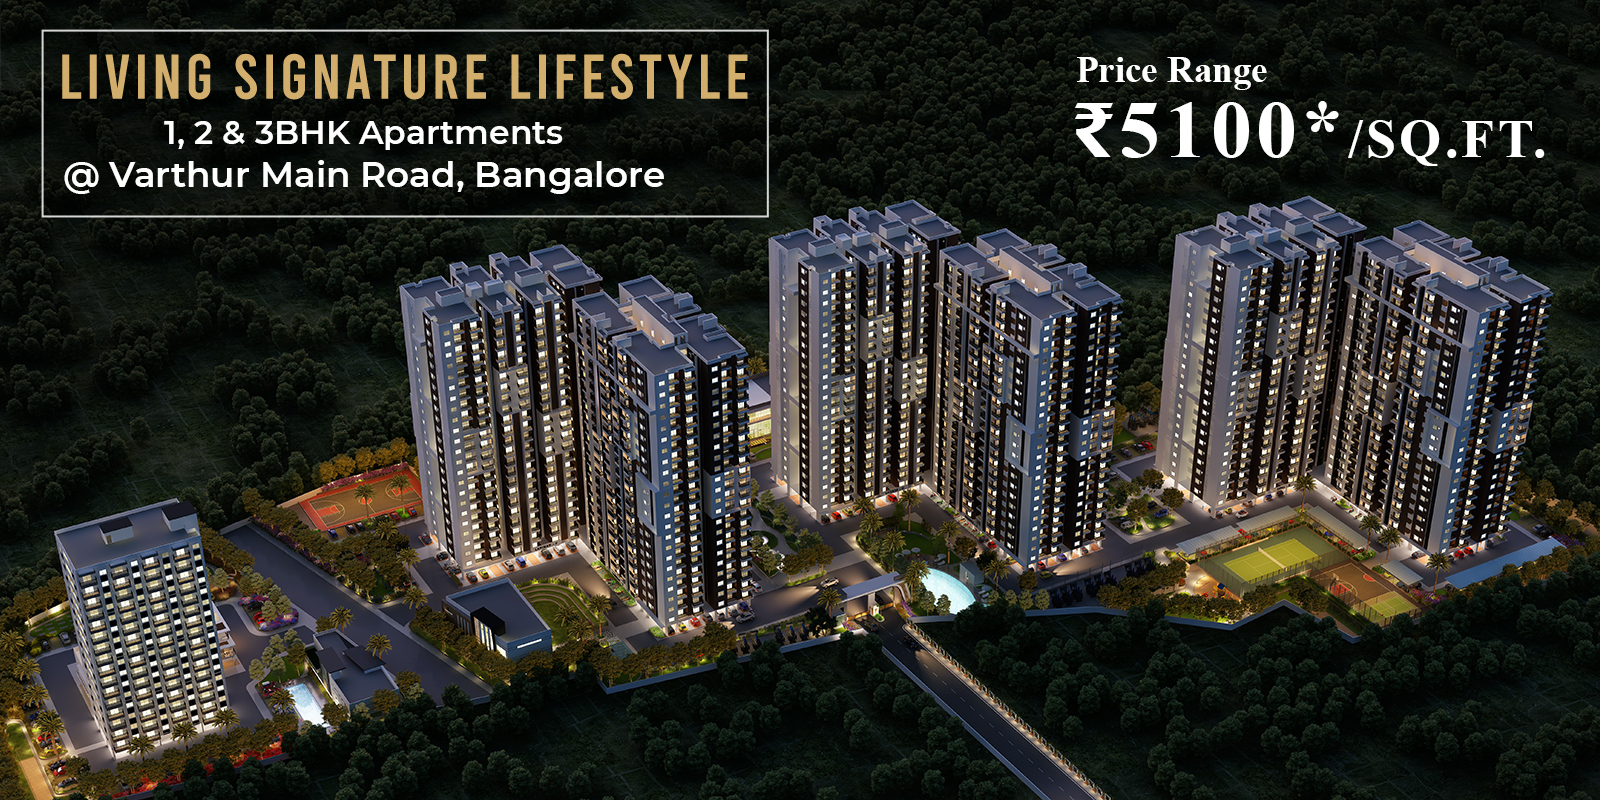 Book 1, 2 and 3 BHK apartments prices range Rs 5100 per Sqft at Candeur Signature, Bangalore